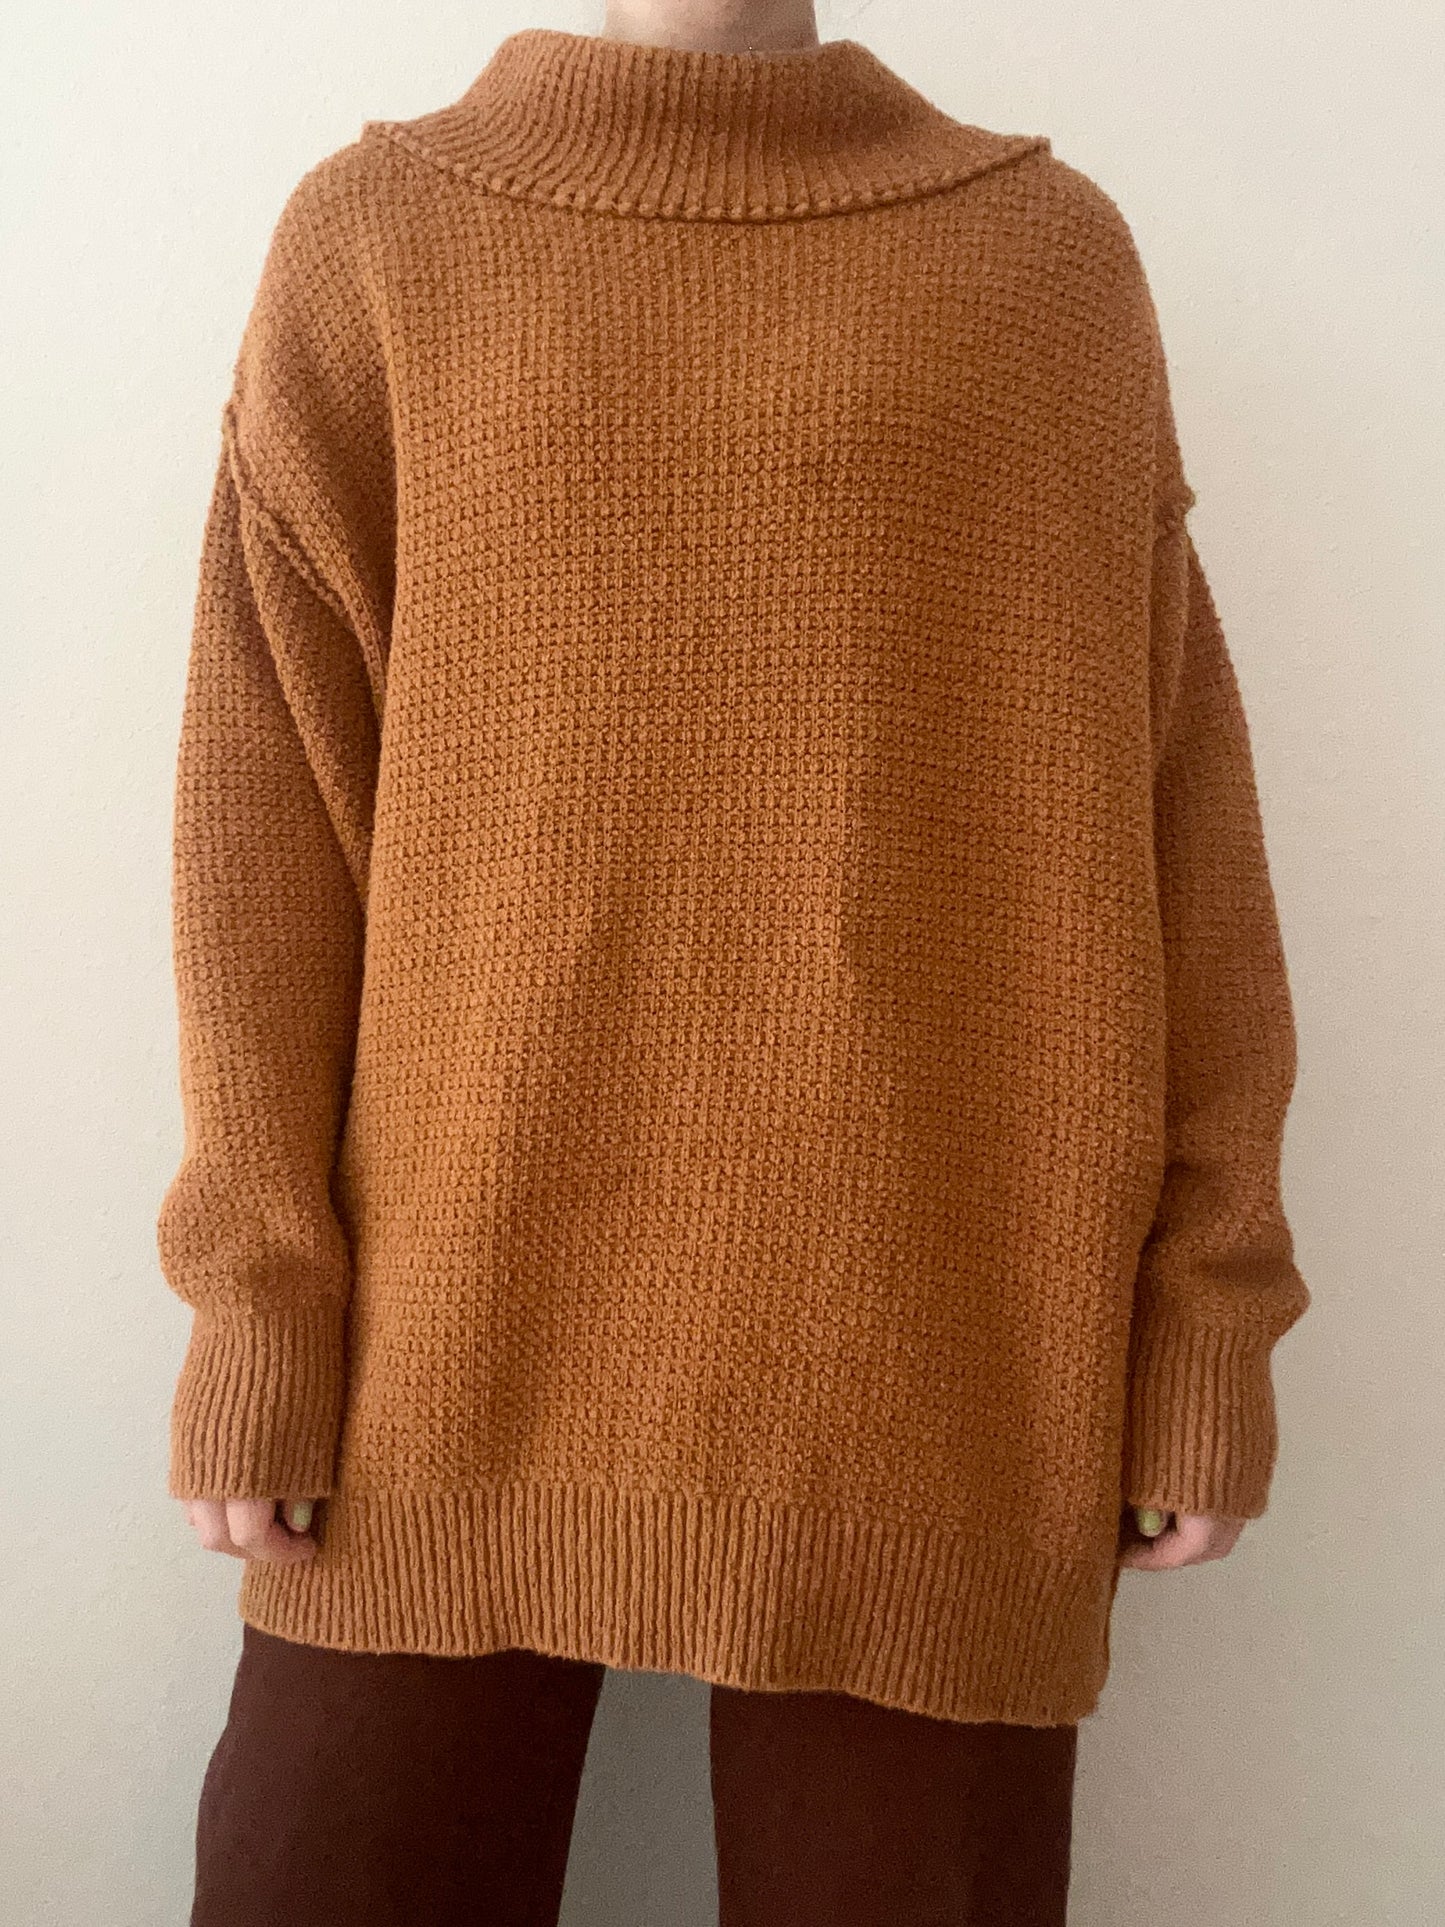 Free People Mock Neck Orange Sweater (M)